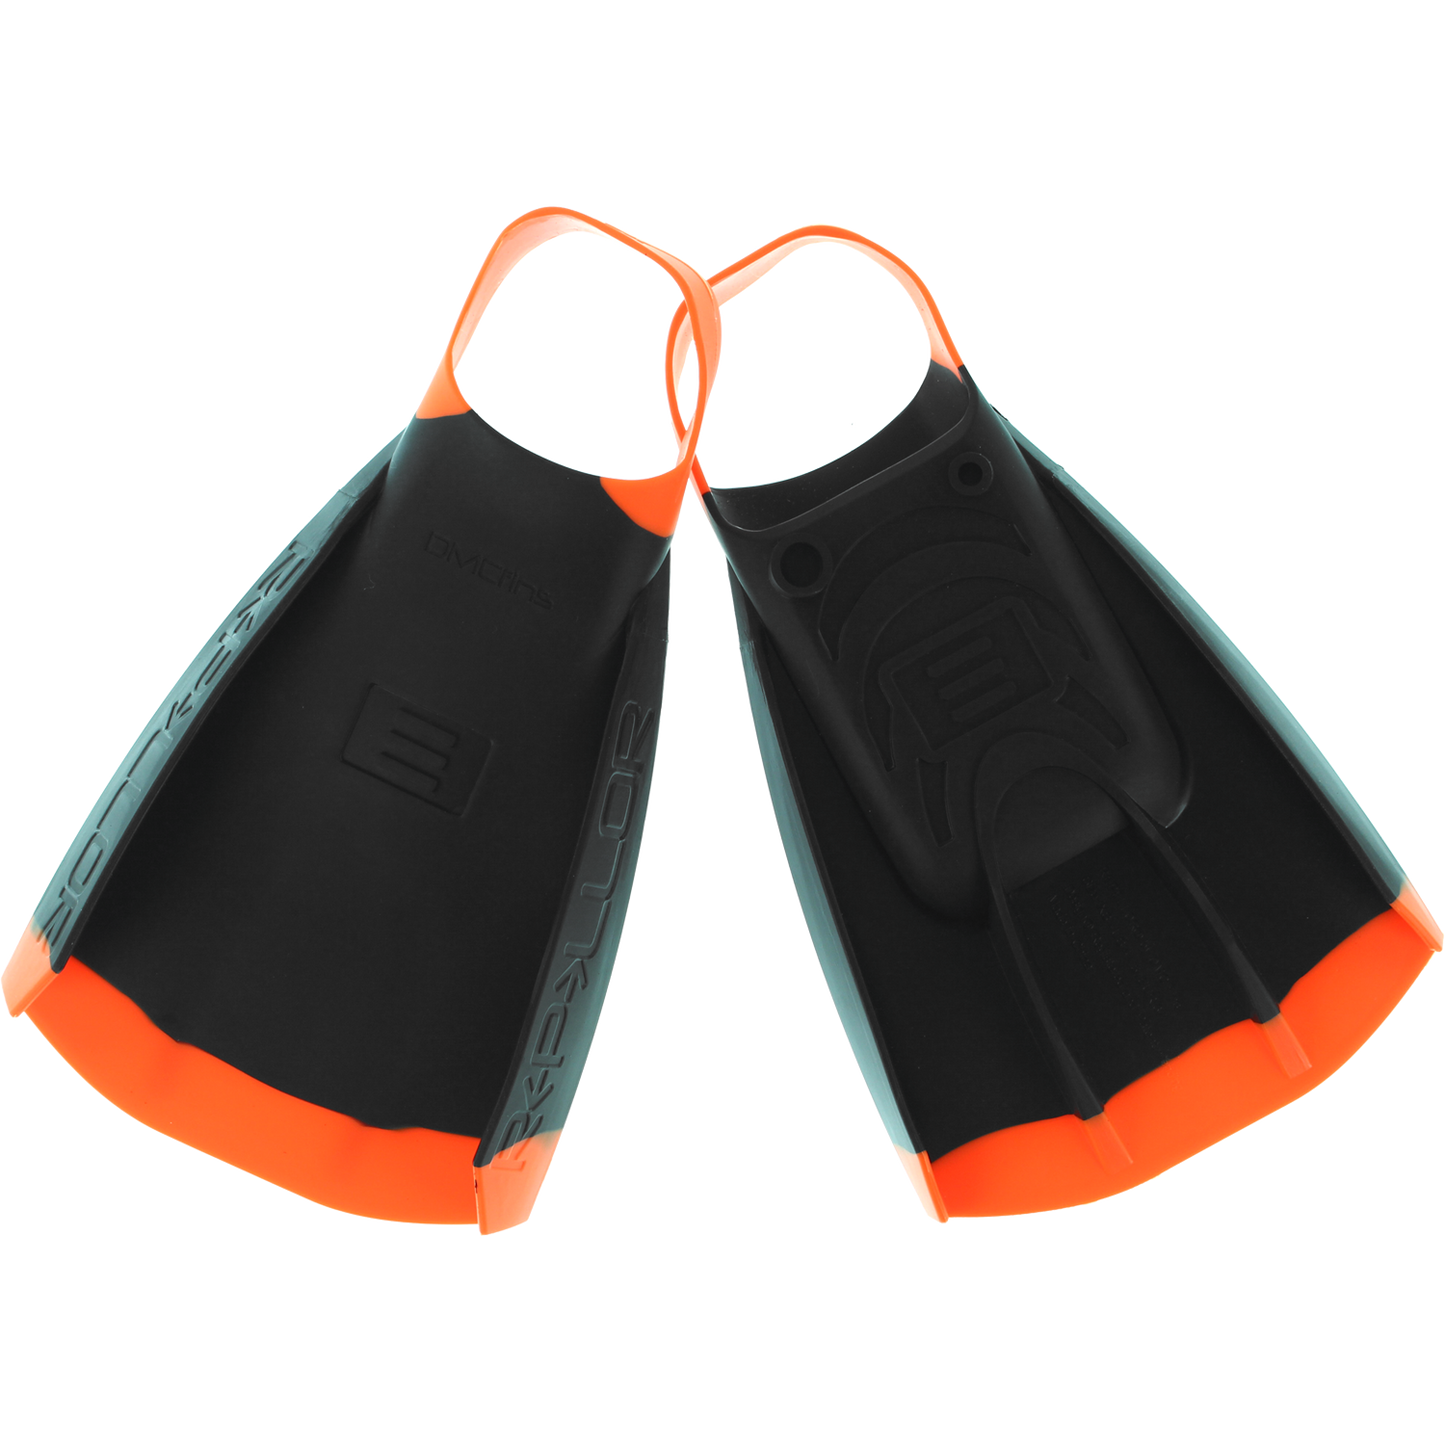 Dmc Repellor Swim Fins M/L-Black/Orange (Size9-10)